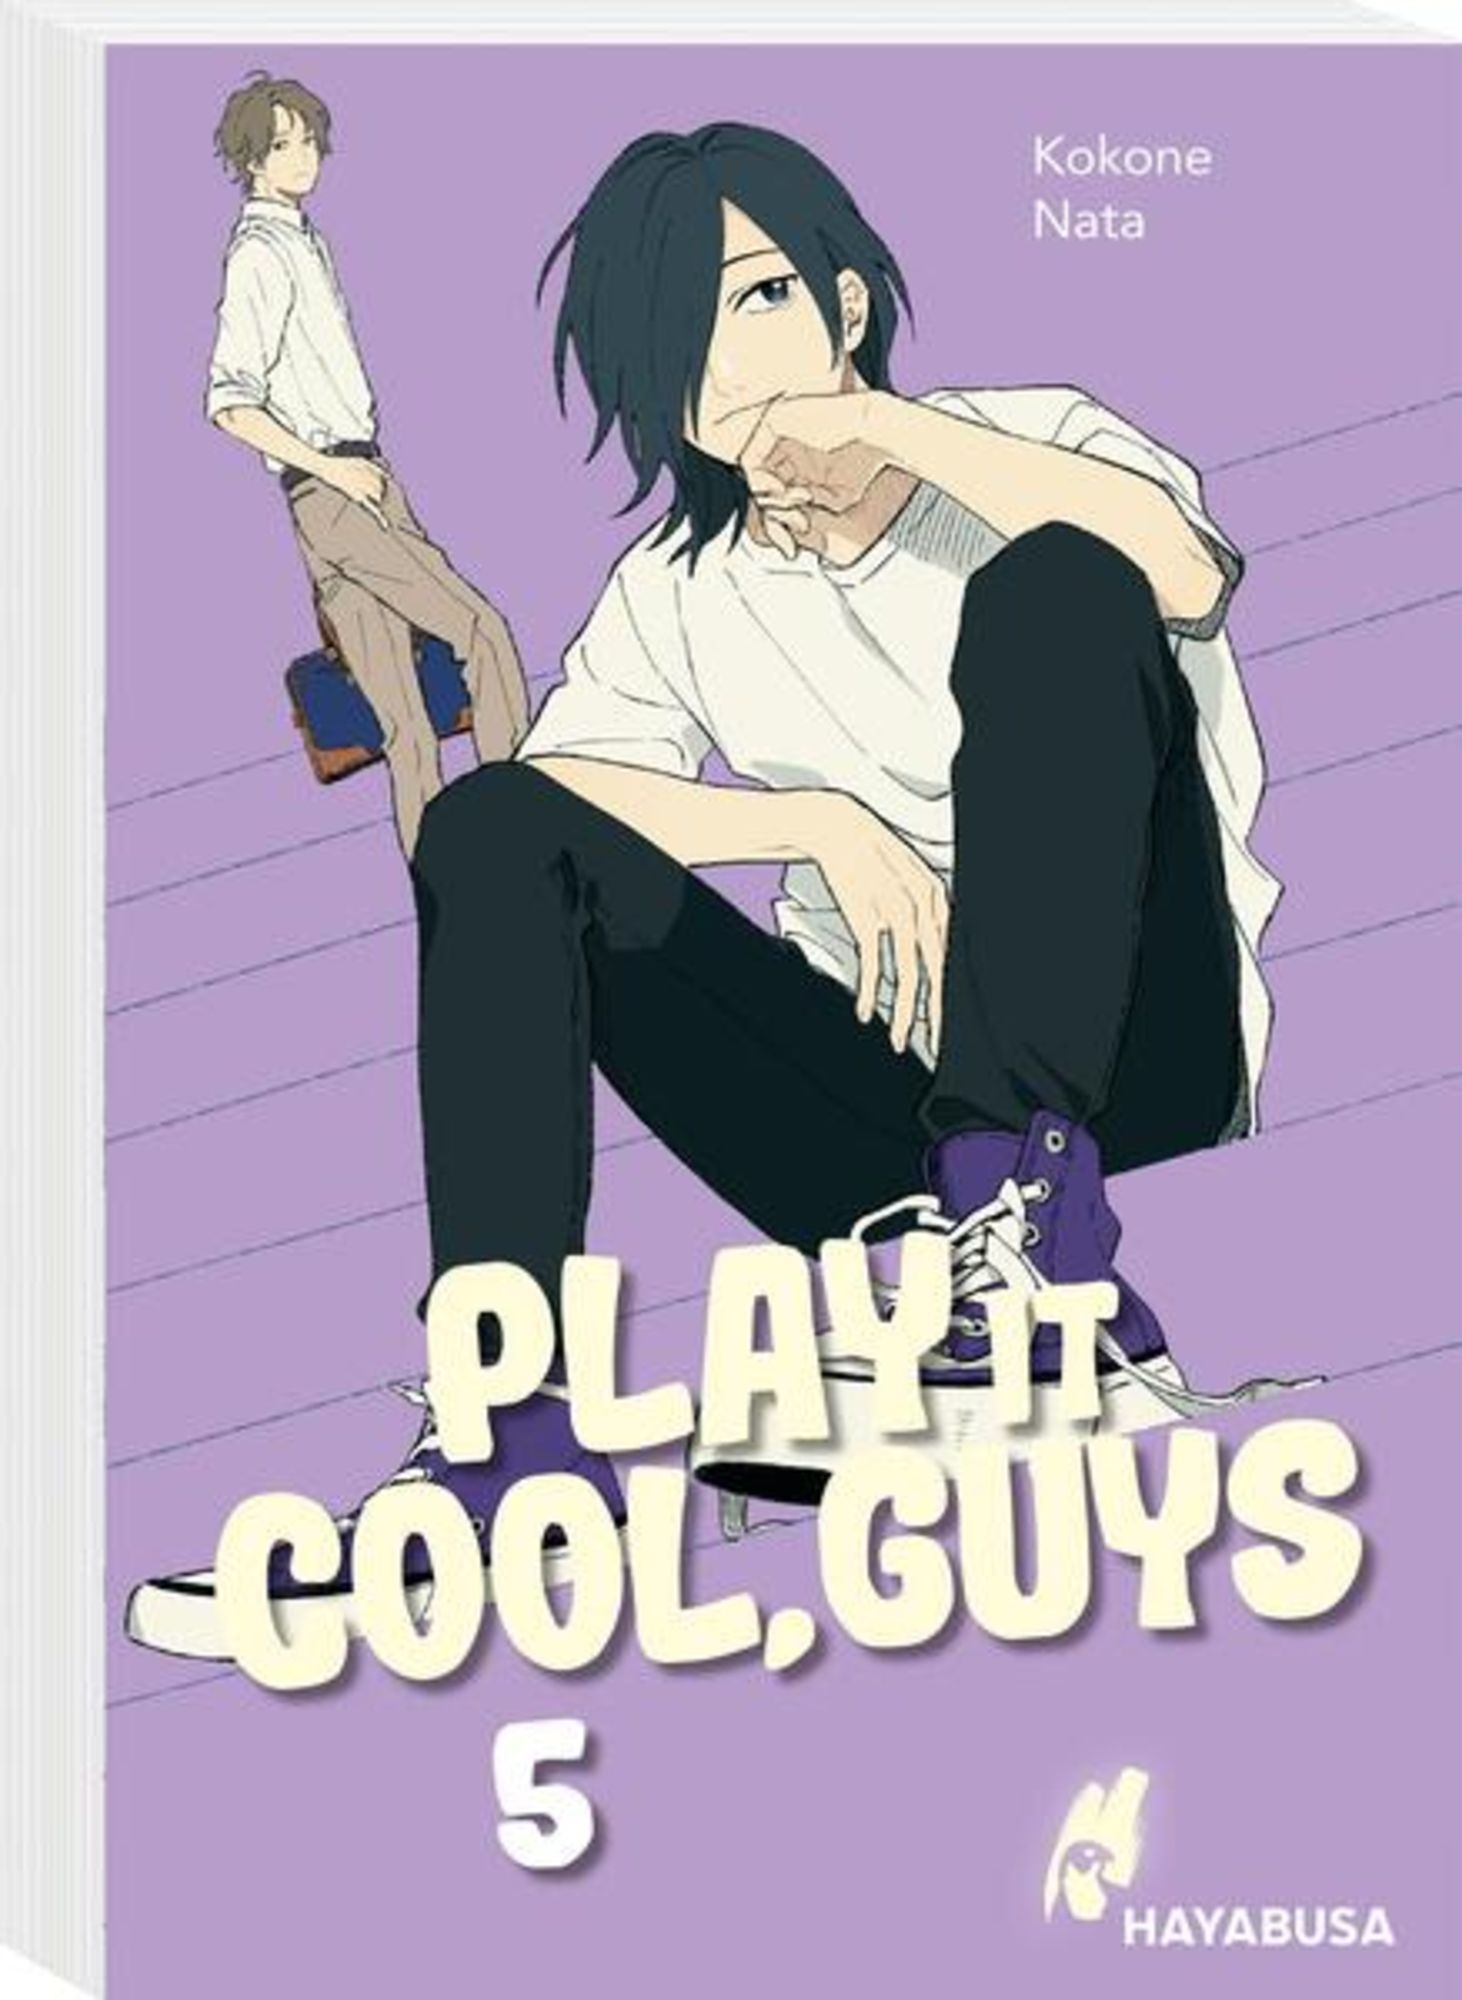 Cool Doji Danshi / Play it Cool Guys Vol 1 By Kokone Nata – What